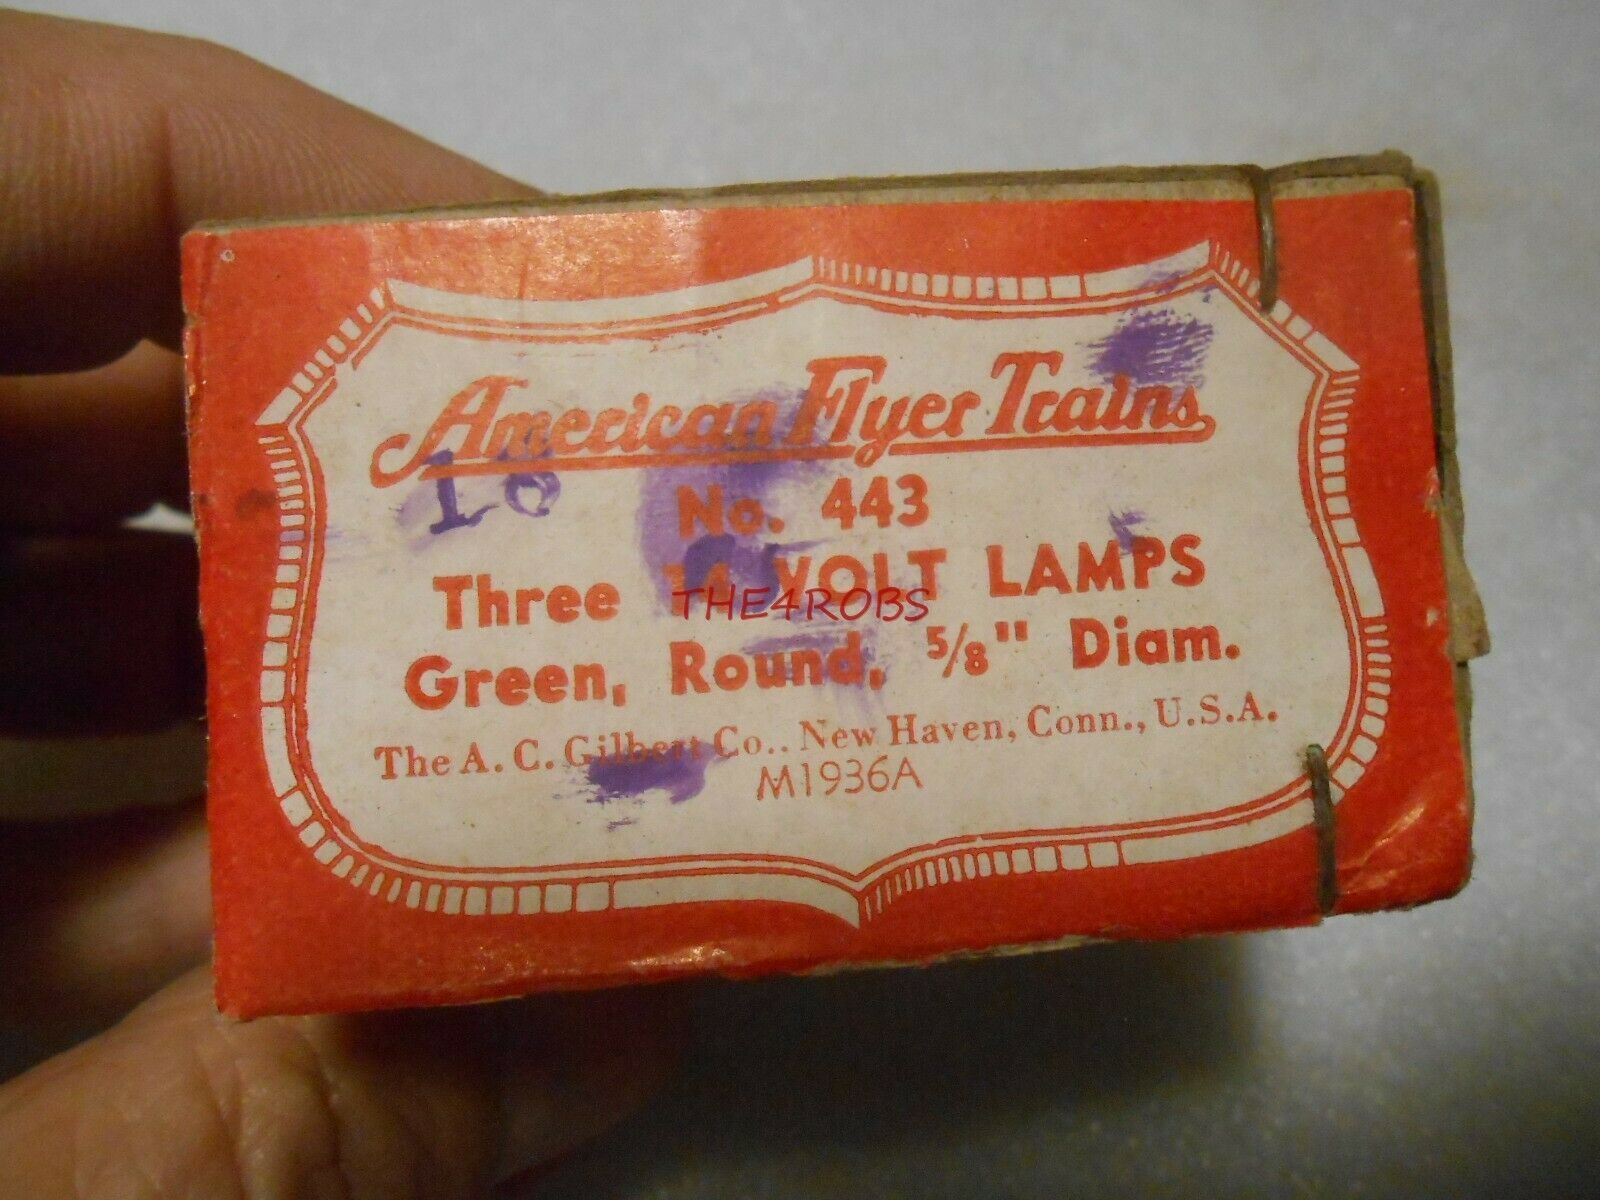 Vintage American Flyer 443 14 volt Green Lamp Bulbs Sealed Box